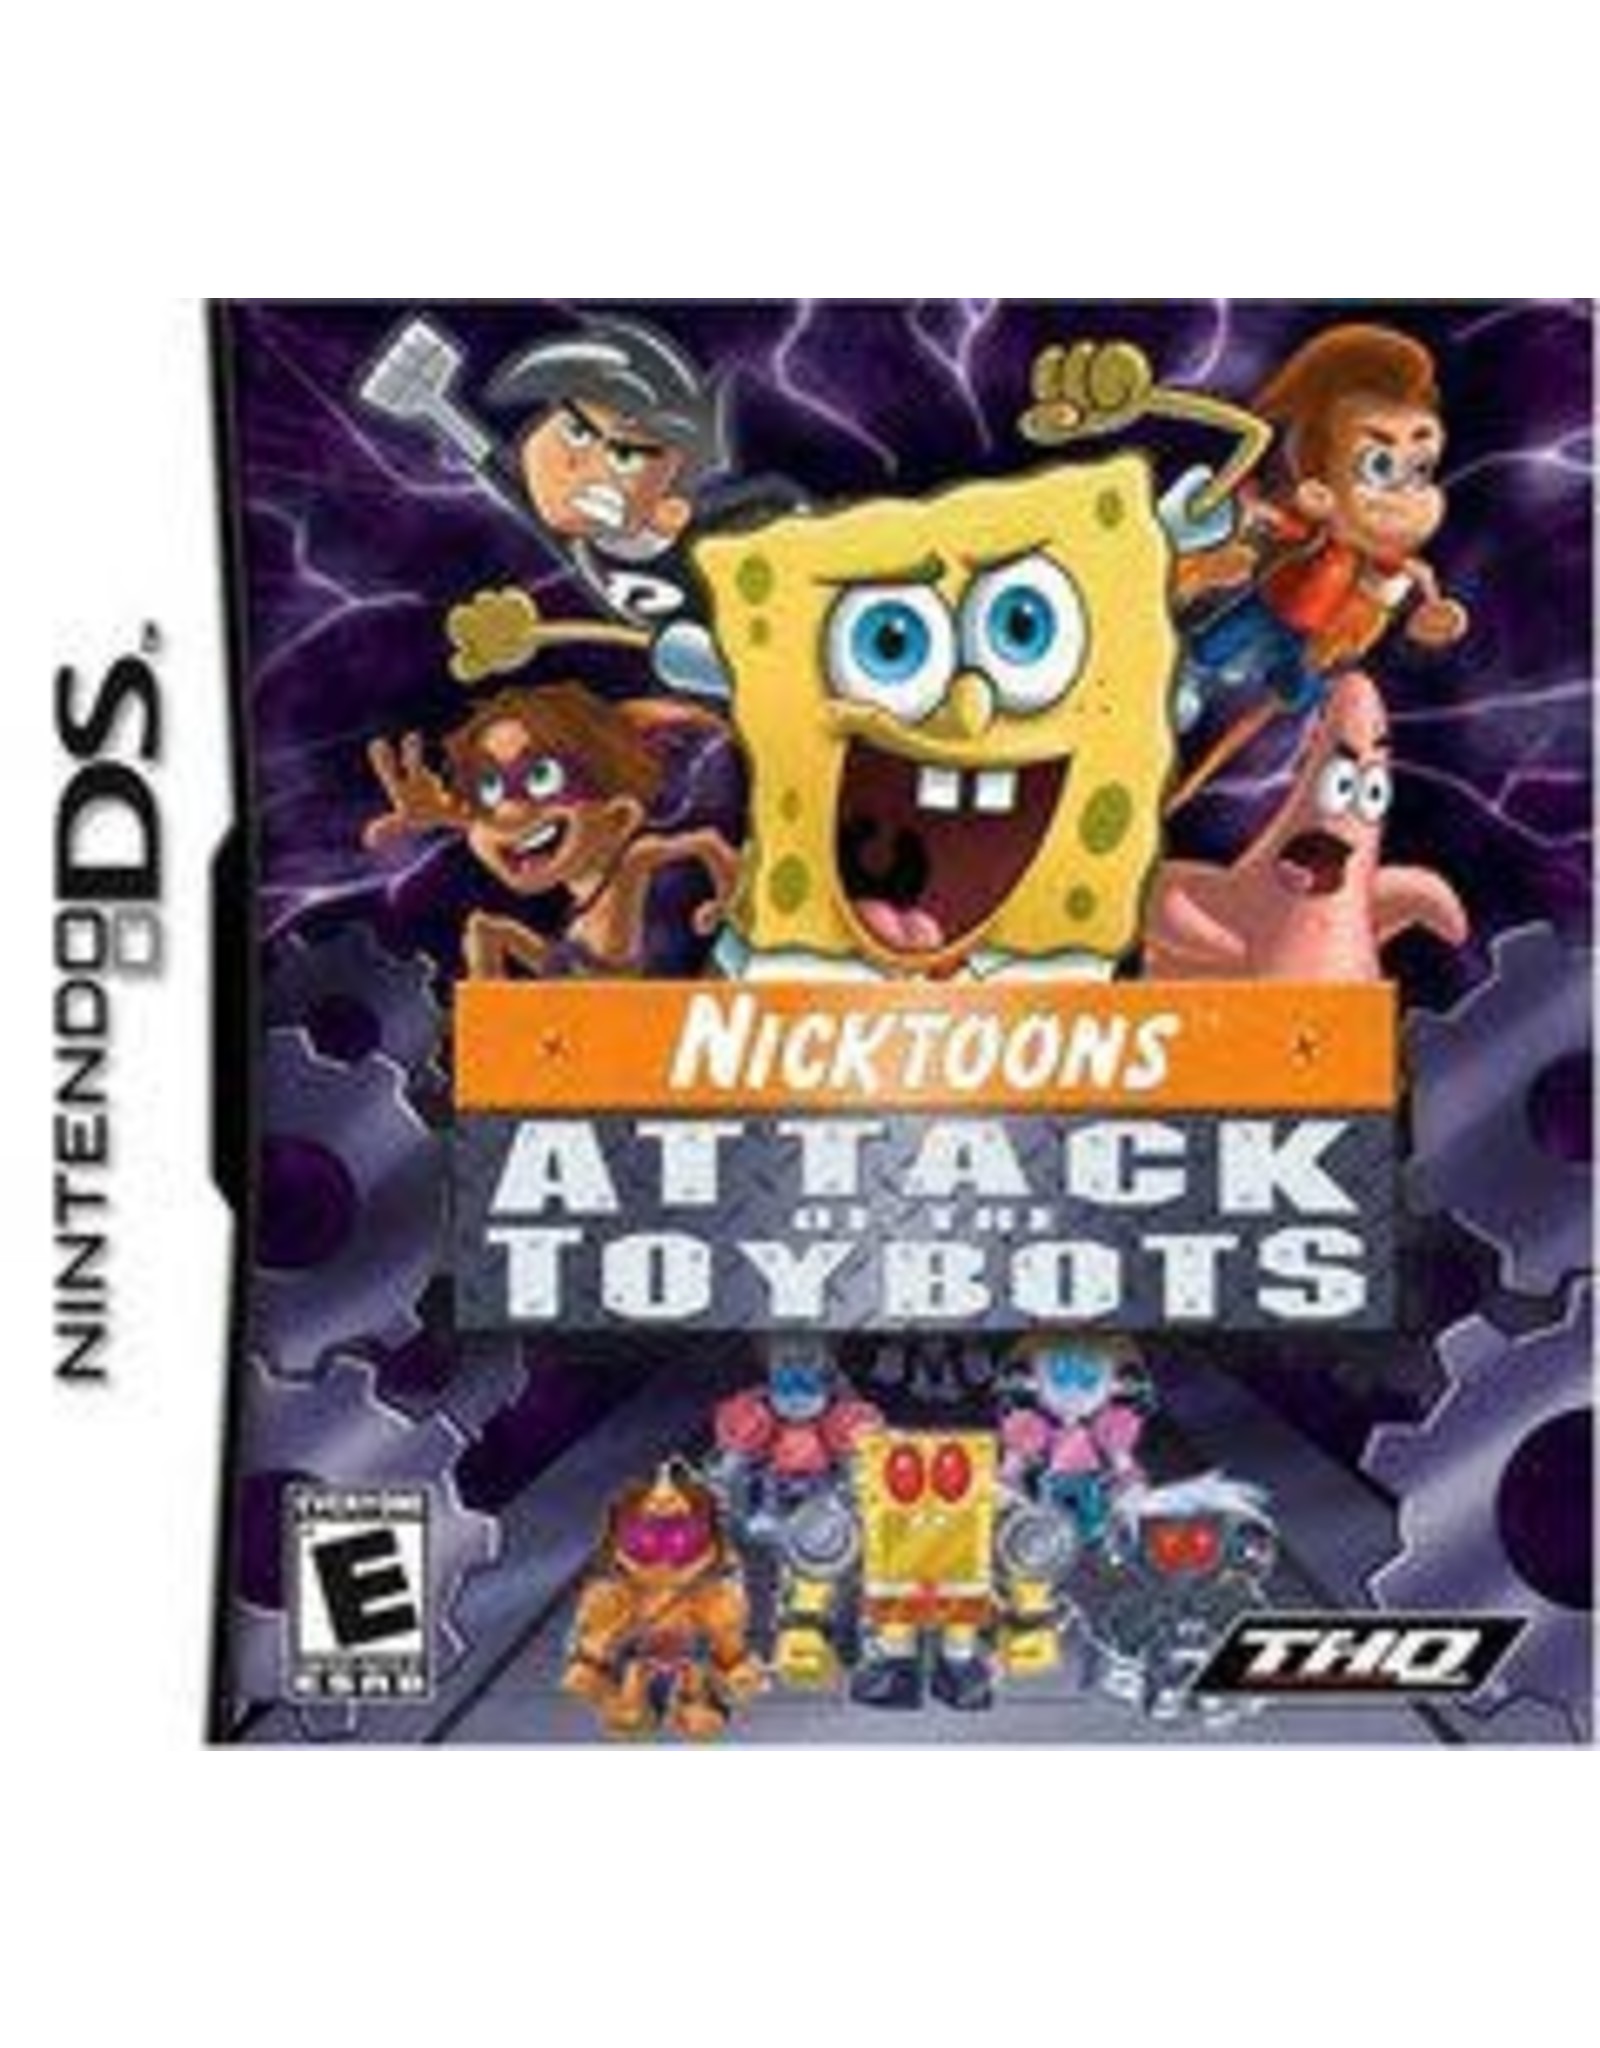 Nintendo DS Nicktoons Attack of the Toybots (CiB)